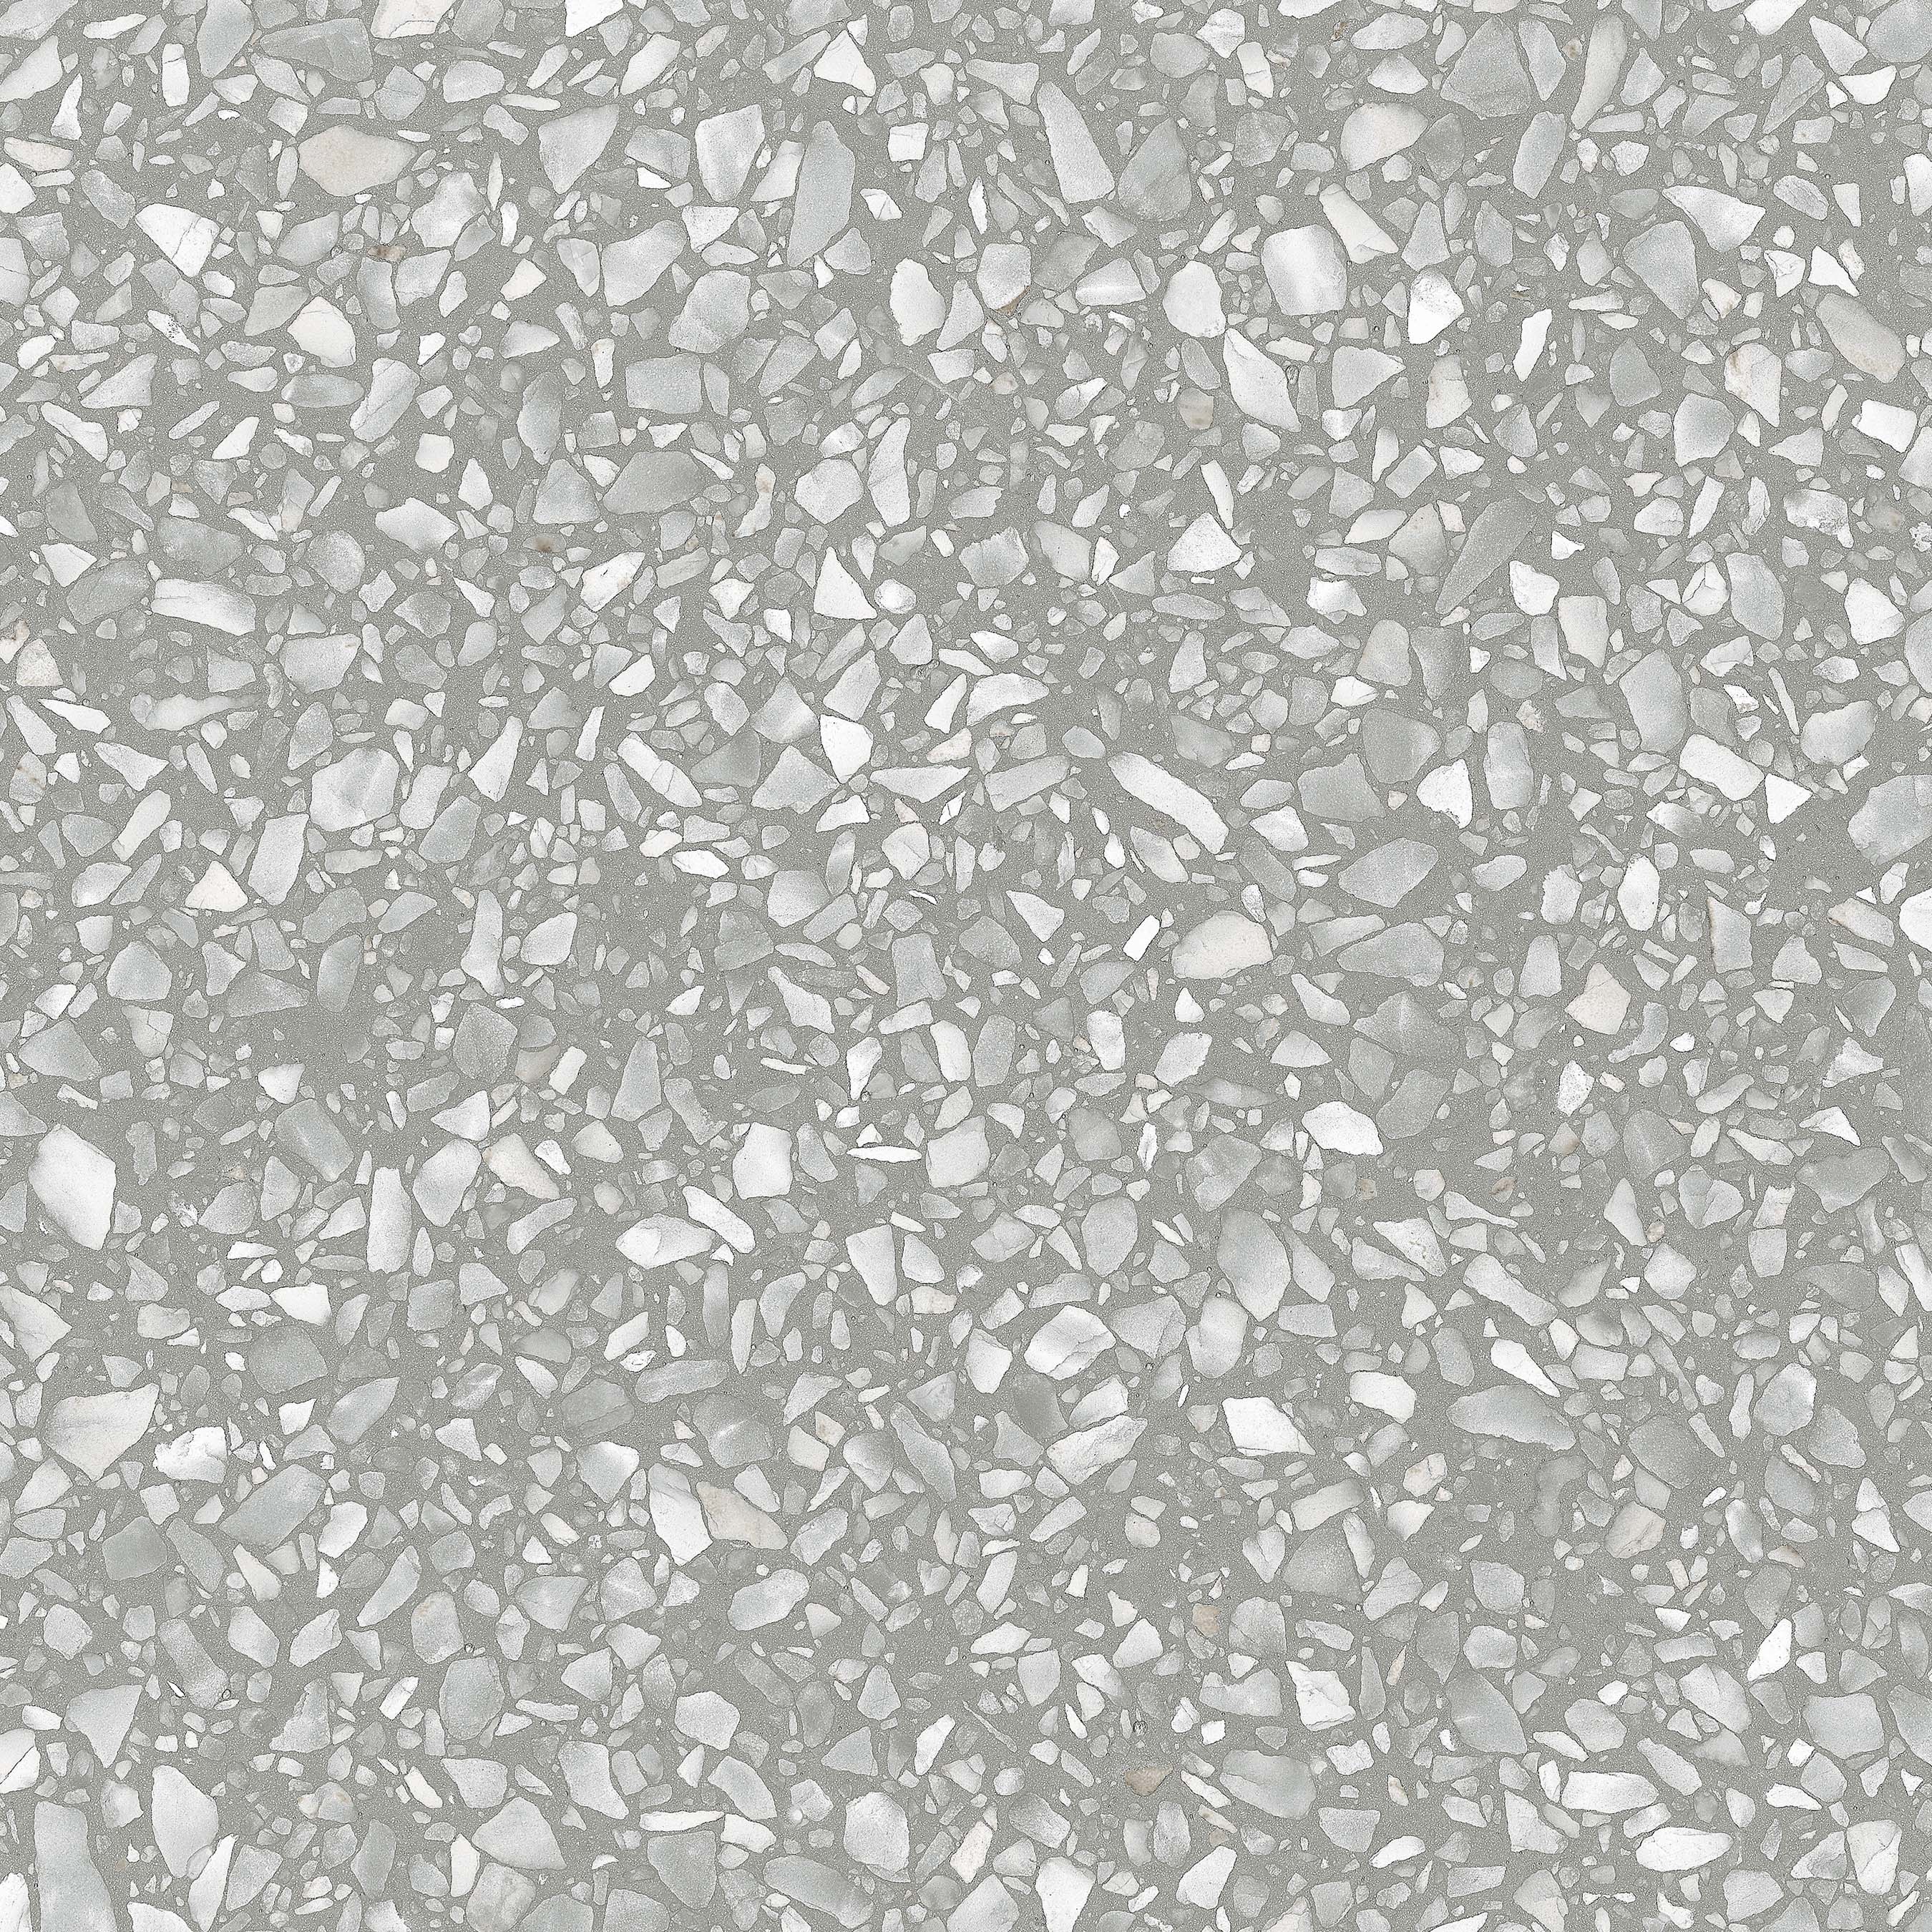 landmark 9mm elite fashion grey field tile 24x24x9mm matte rectified porcelain tile distributed by surface group international